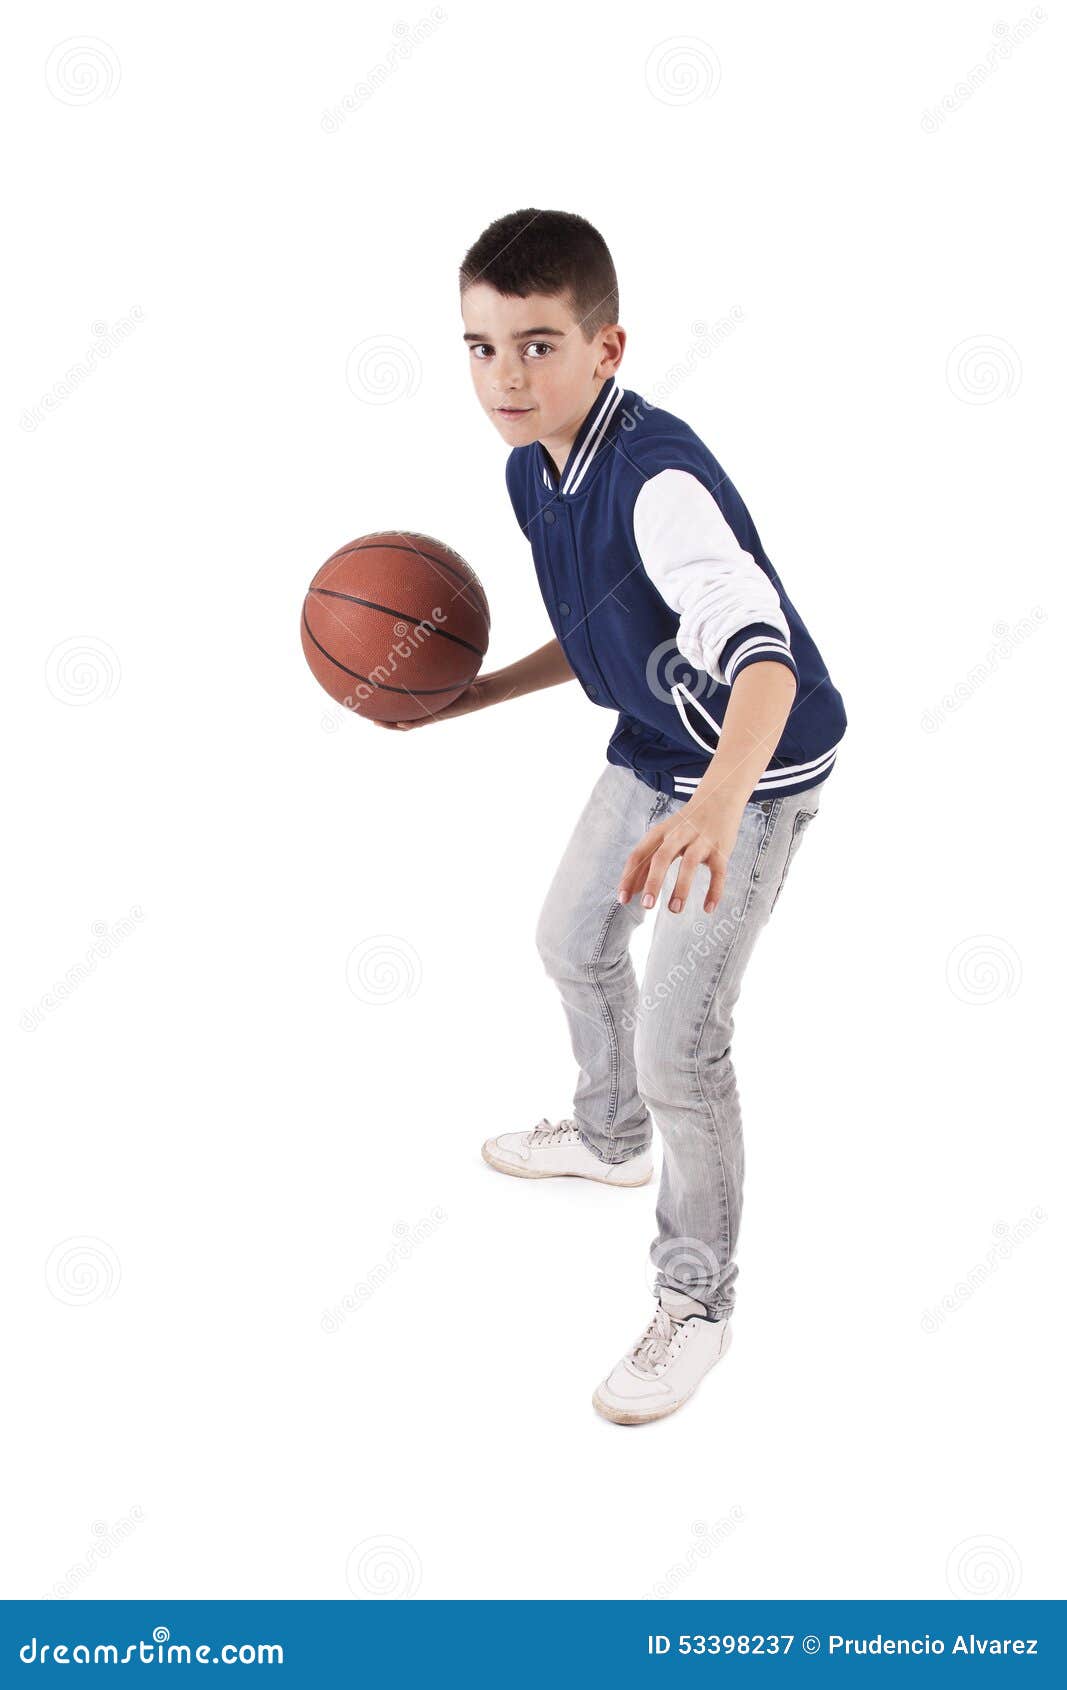 1,260 Child Basketball Gym Stock Photos - Free & Royalty-Free